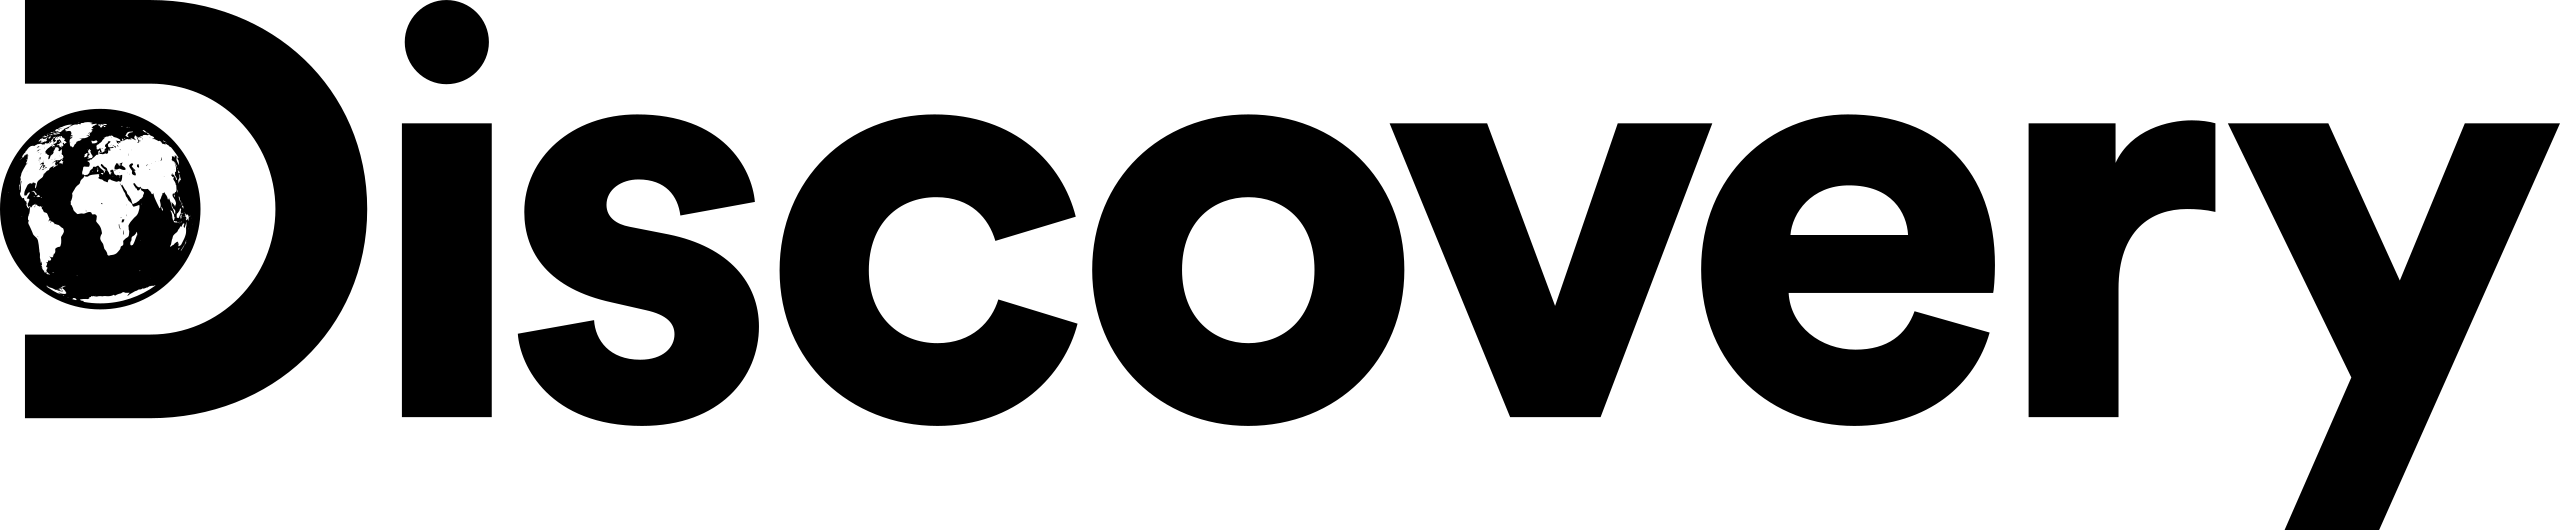 2019_Discovery_logo.svg (1)